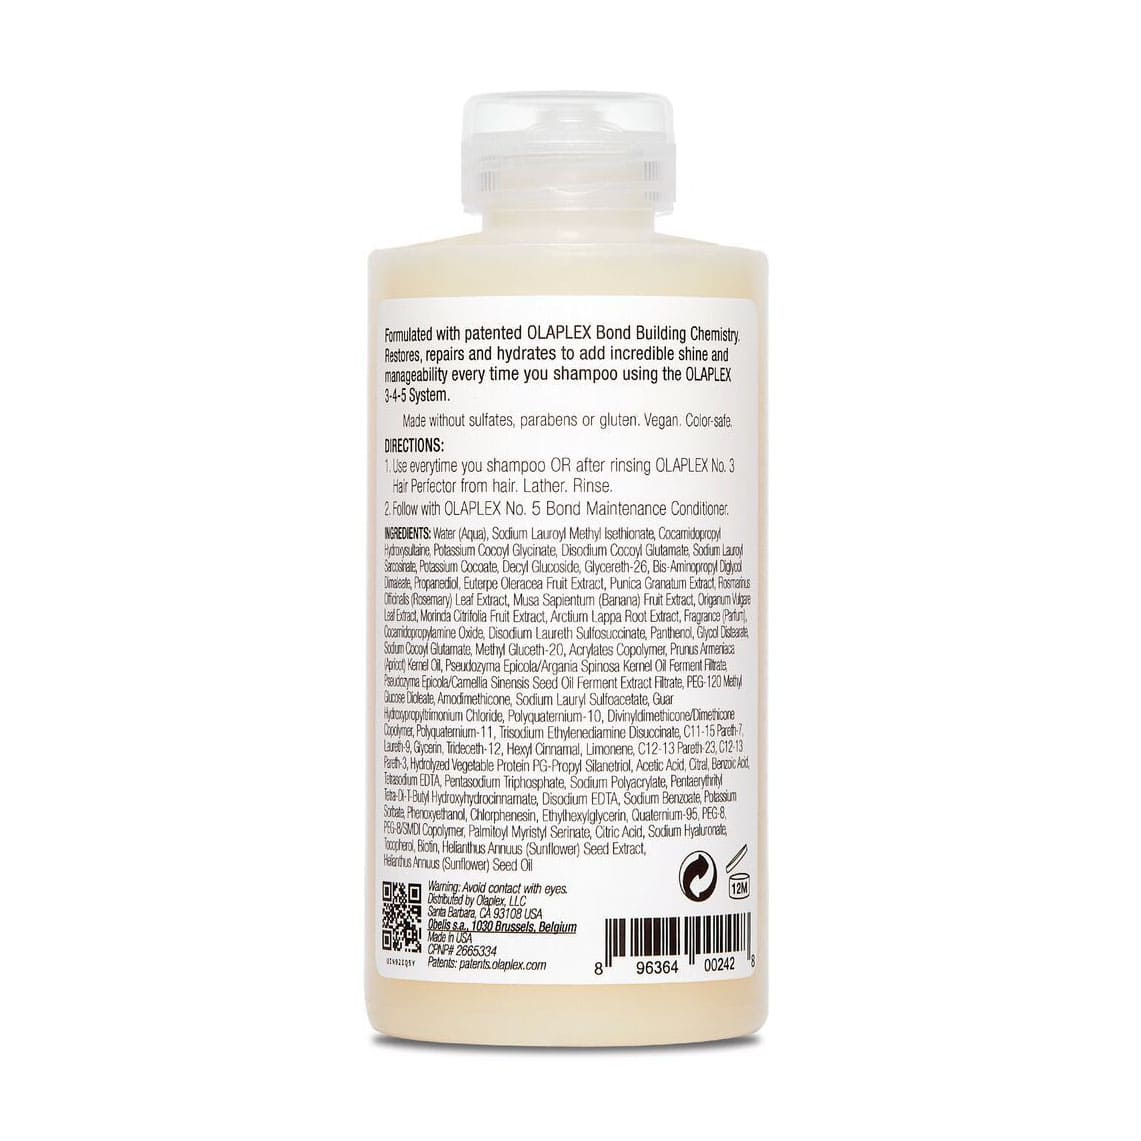 Olaplex No.4 Bond Maintenance Shampoo - 250ml - Bloom Pharmacy